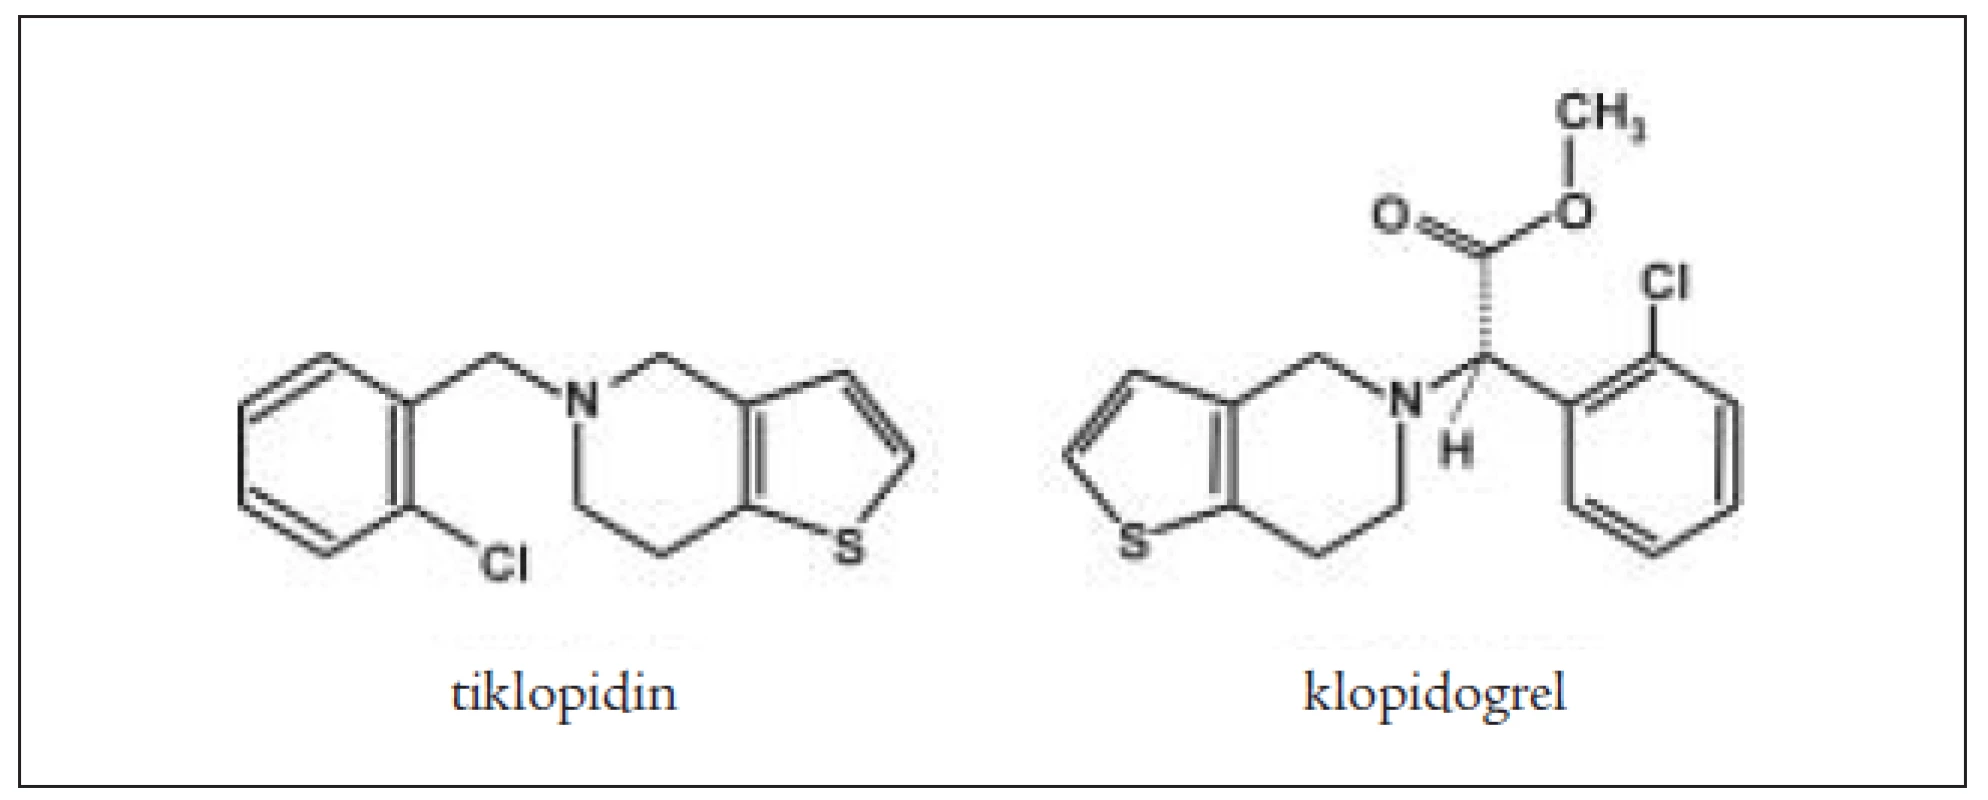 Chemická struktura tiklopidinu a klopidogrelu.